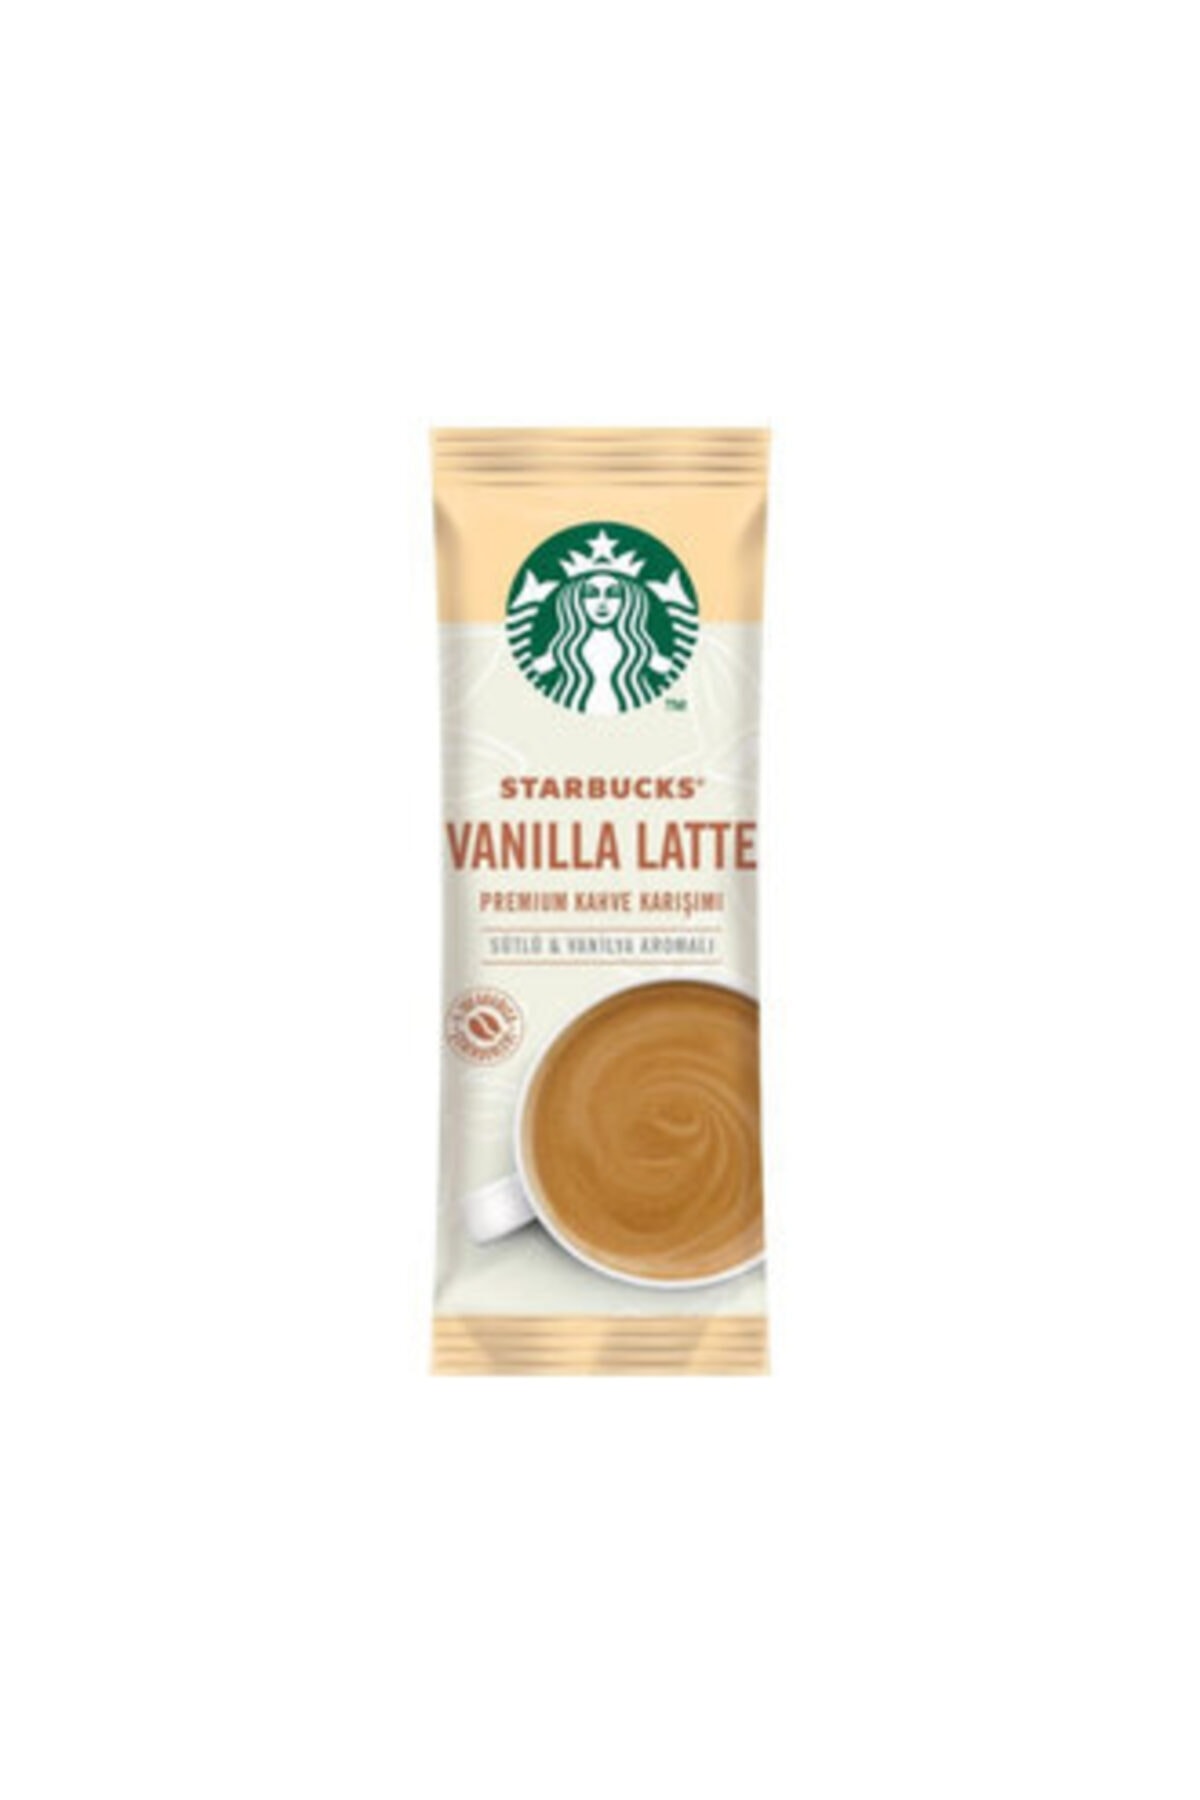 Starbucks Vanilla Latte Premium Kahve Karışımı 21.5 g